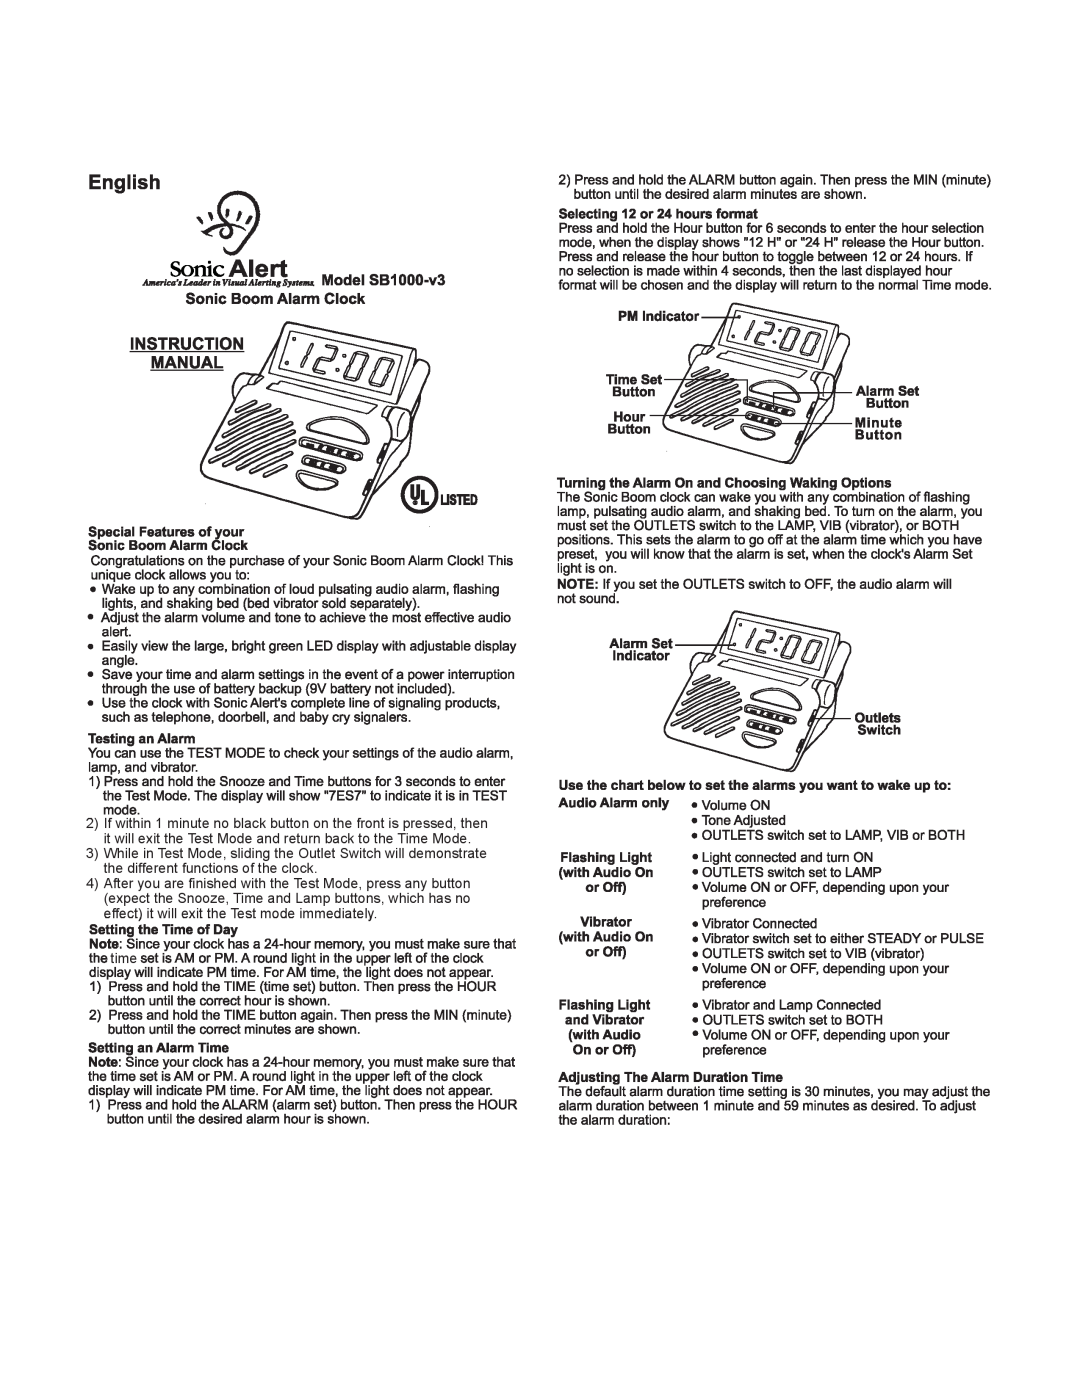 Sonic Alert SB1000-V3 manual time 